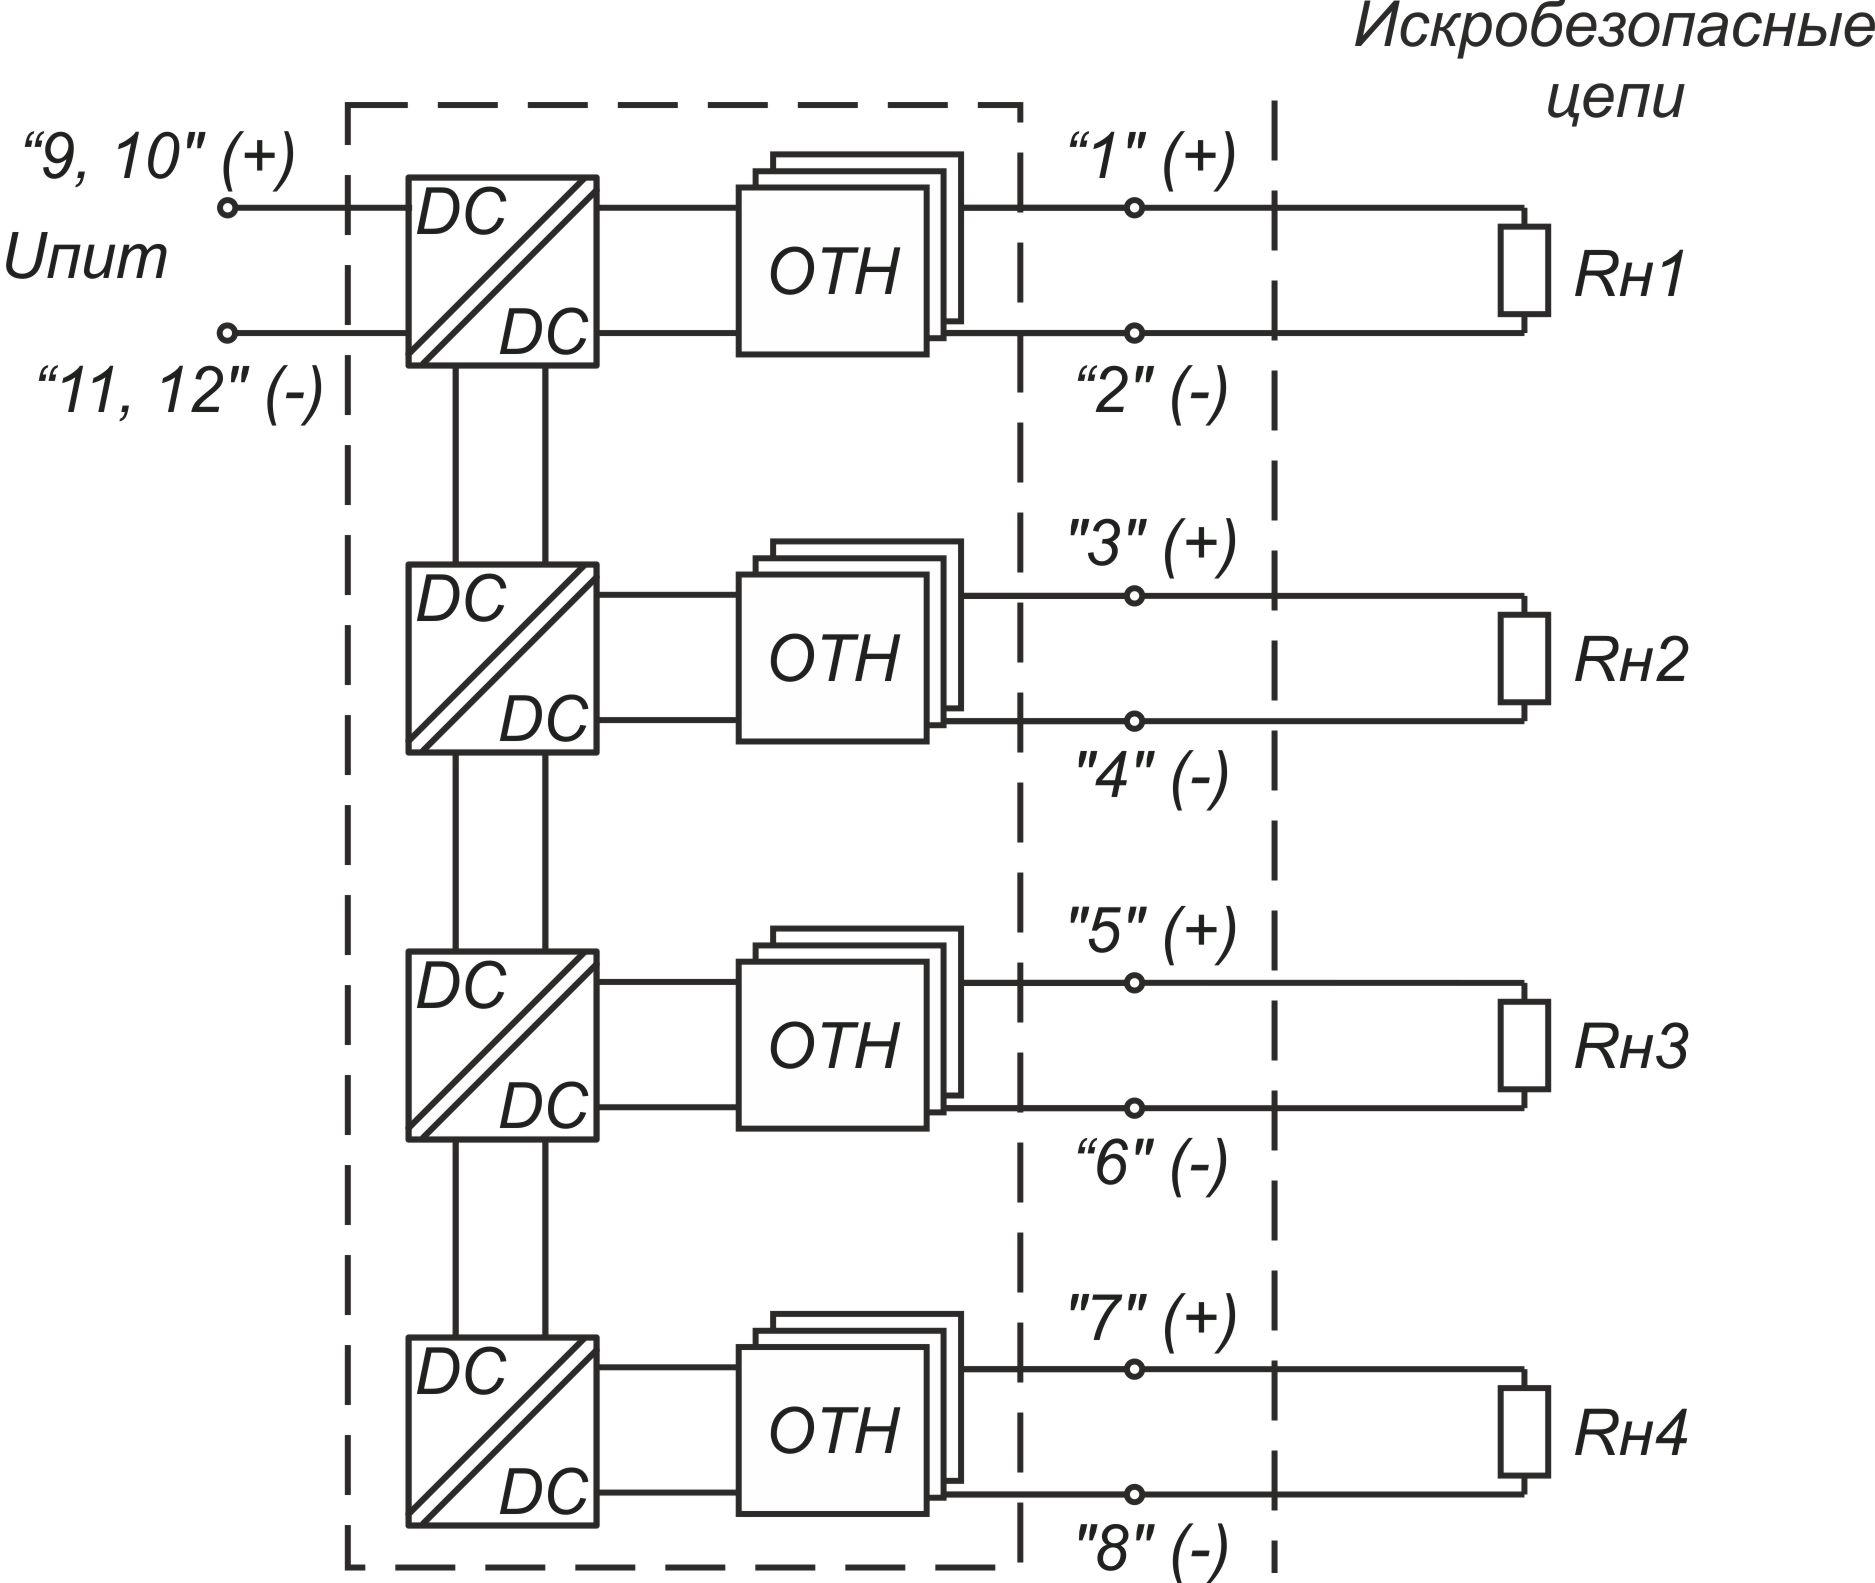 ЛПА-200 Схема подключения нагрузки (4 канала)